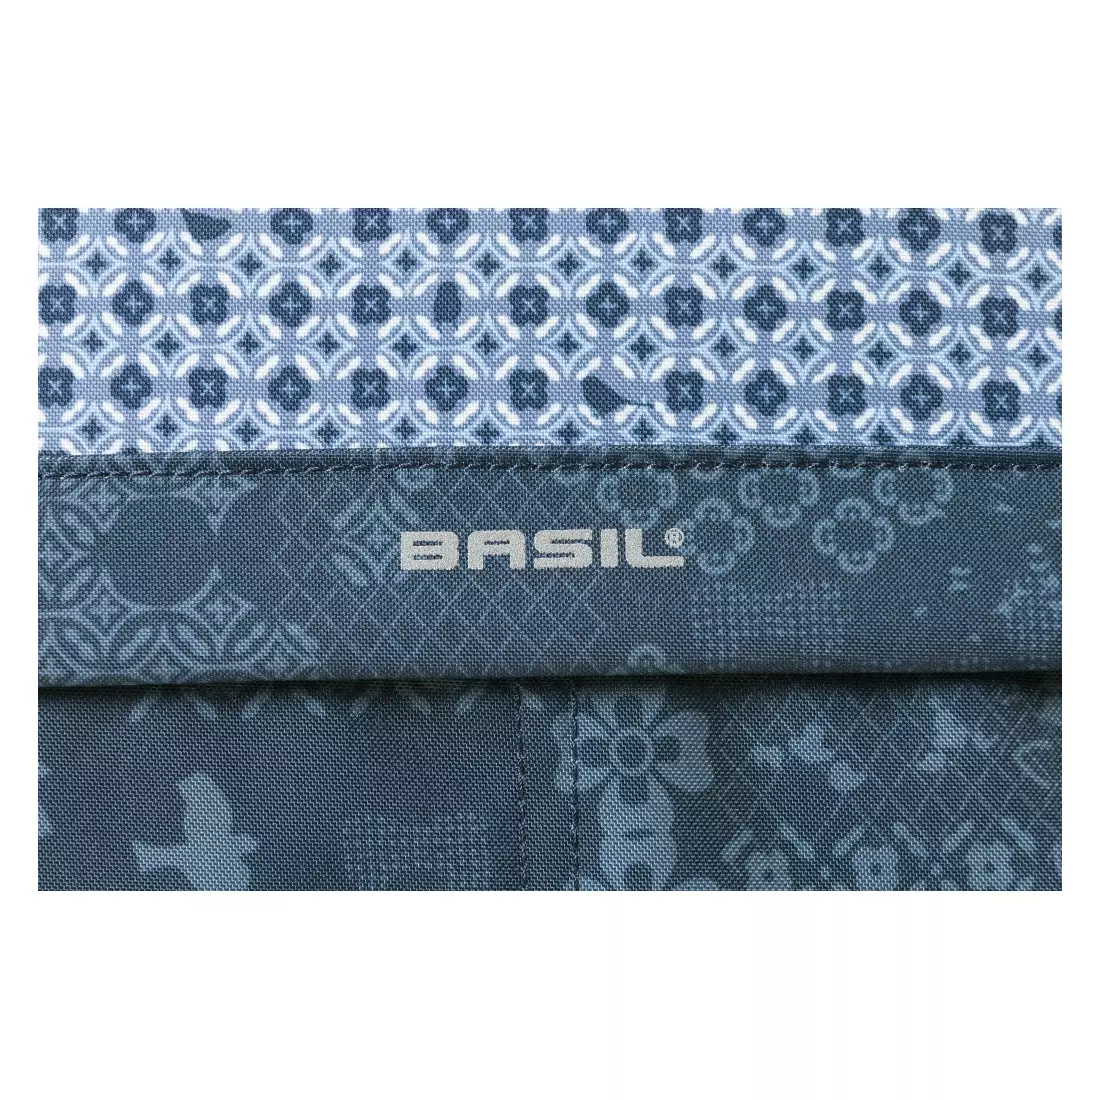 BASIL geanta / geanta pentru portbagaj boheme carry all 18L indigo blue B-18007